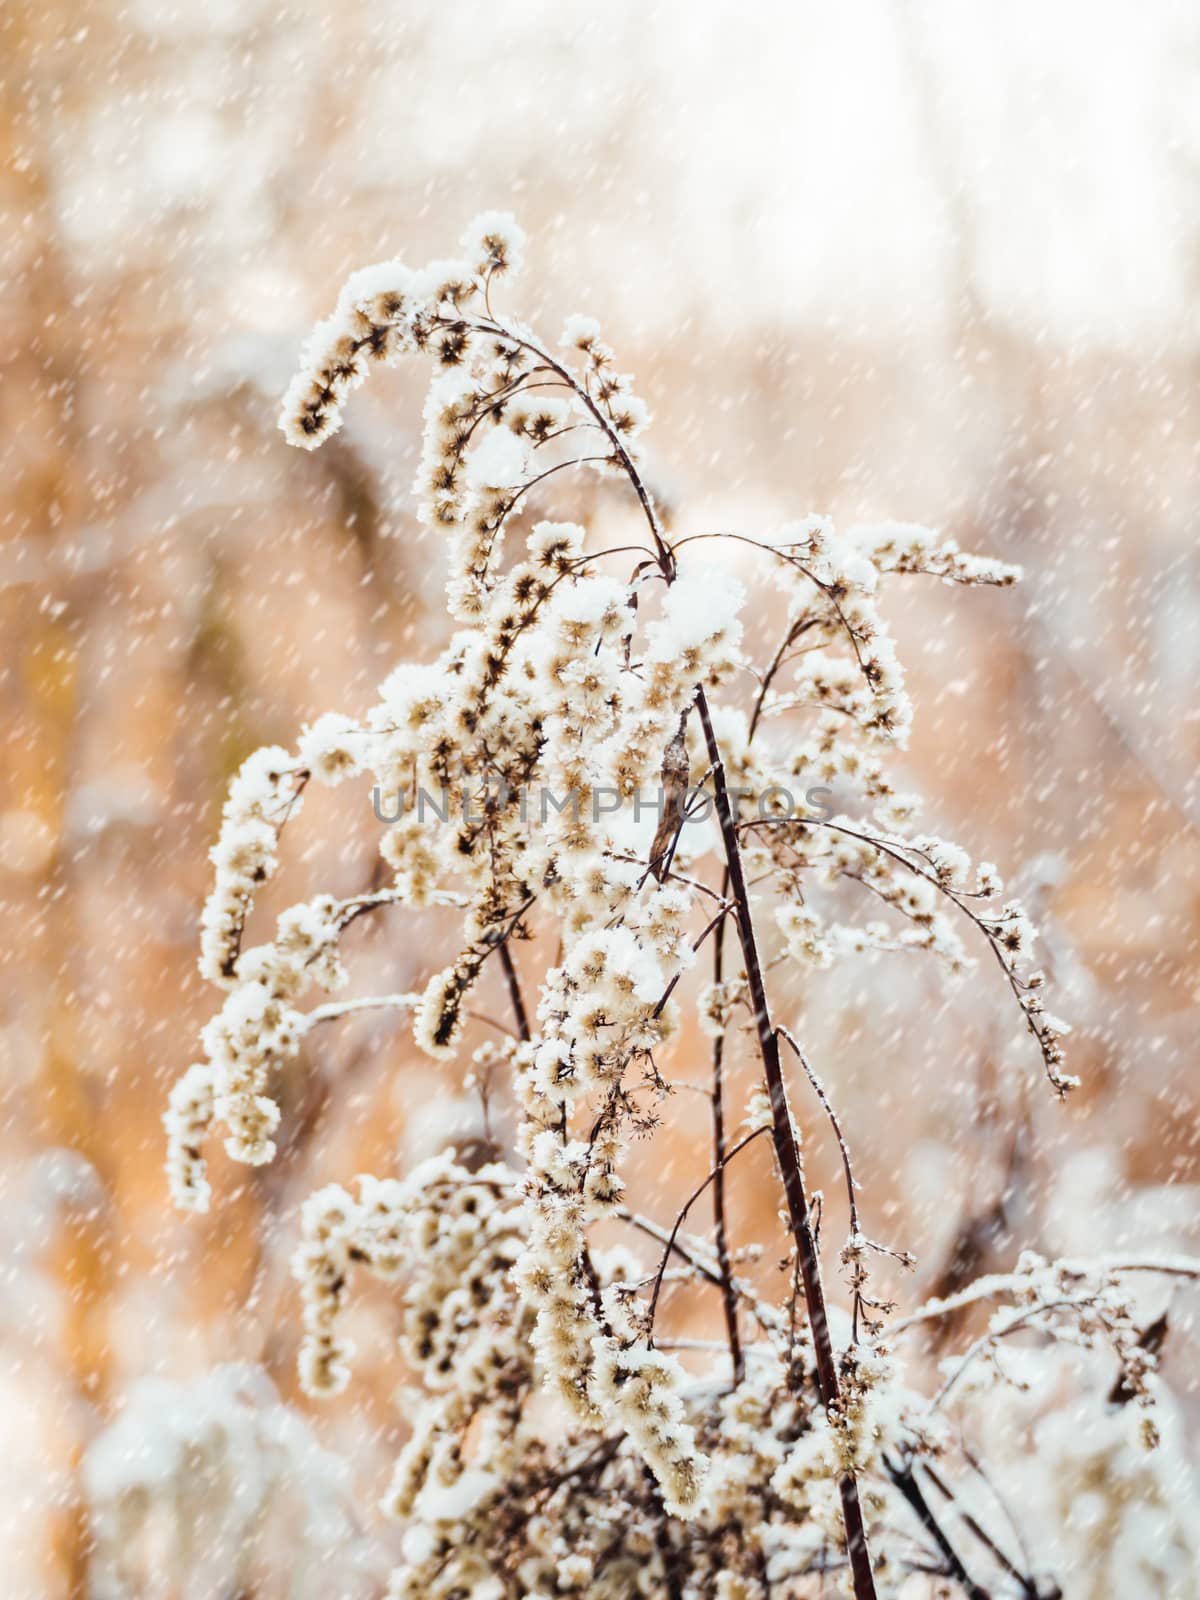 Dried grass under the snow. Snowfall in forest. Winter season. N by aksenovko